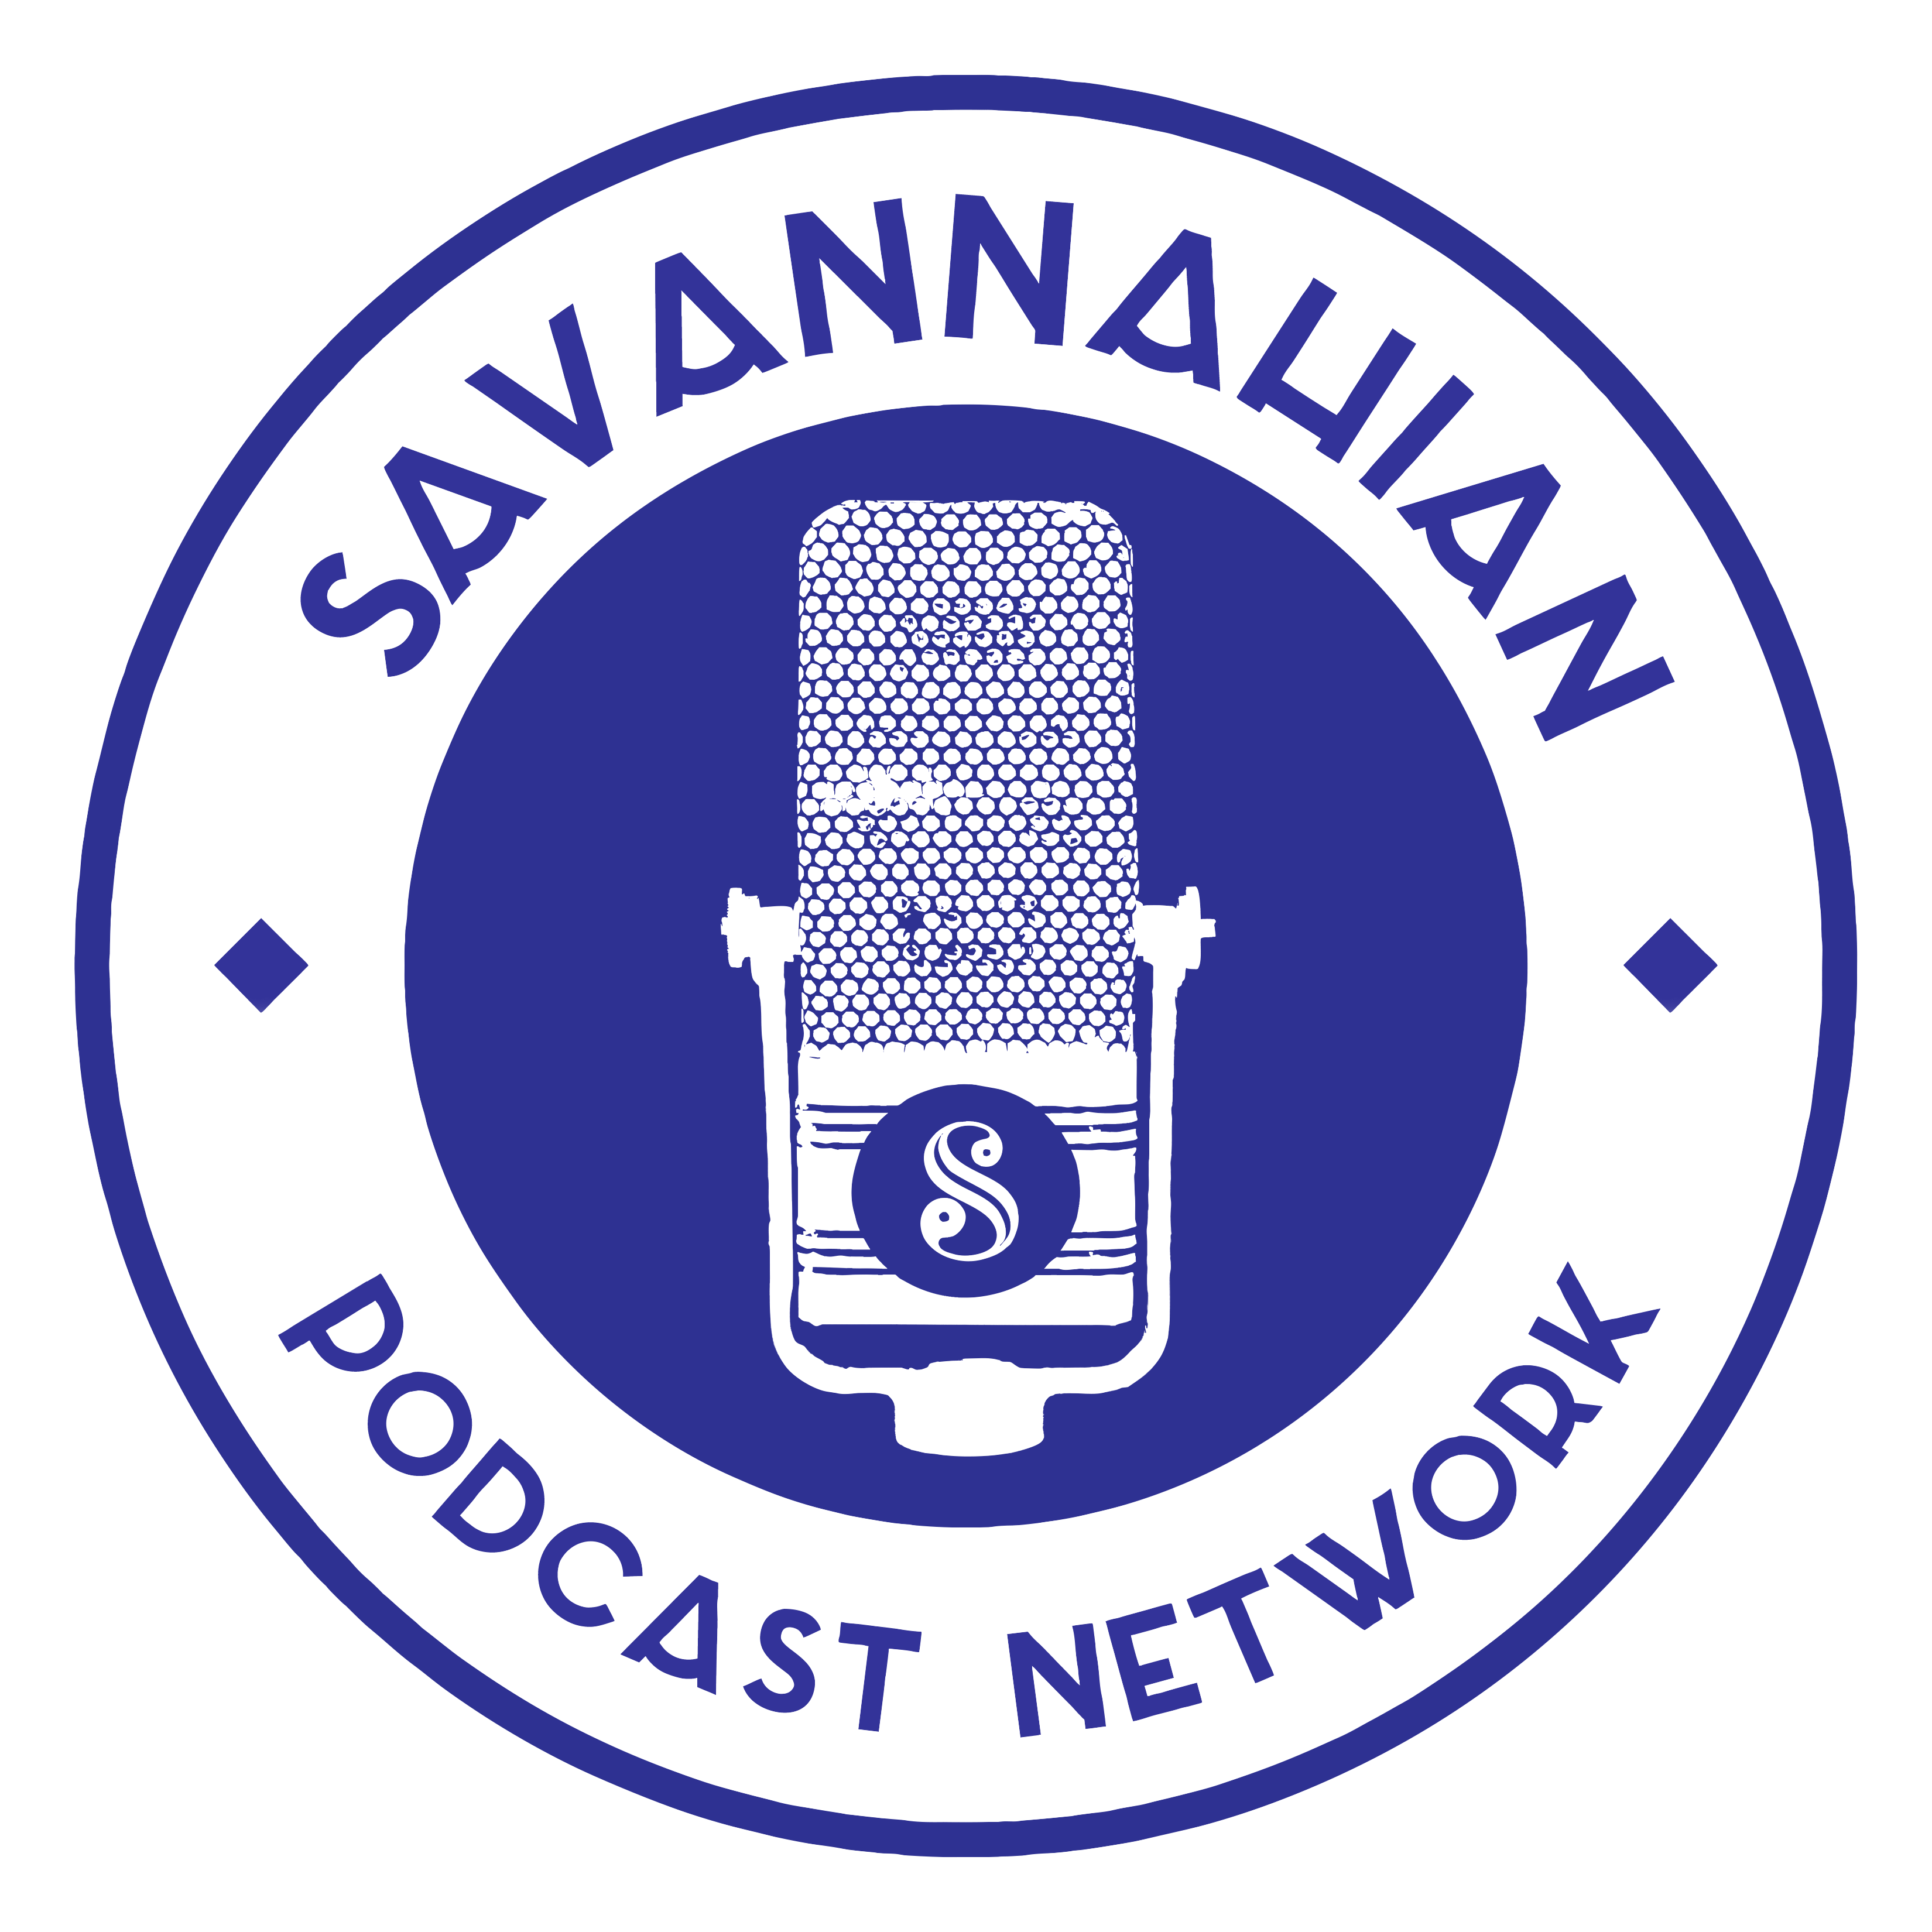 Announcement: Savannahian Podcast Network coming soon!